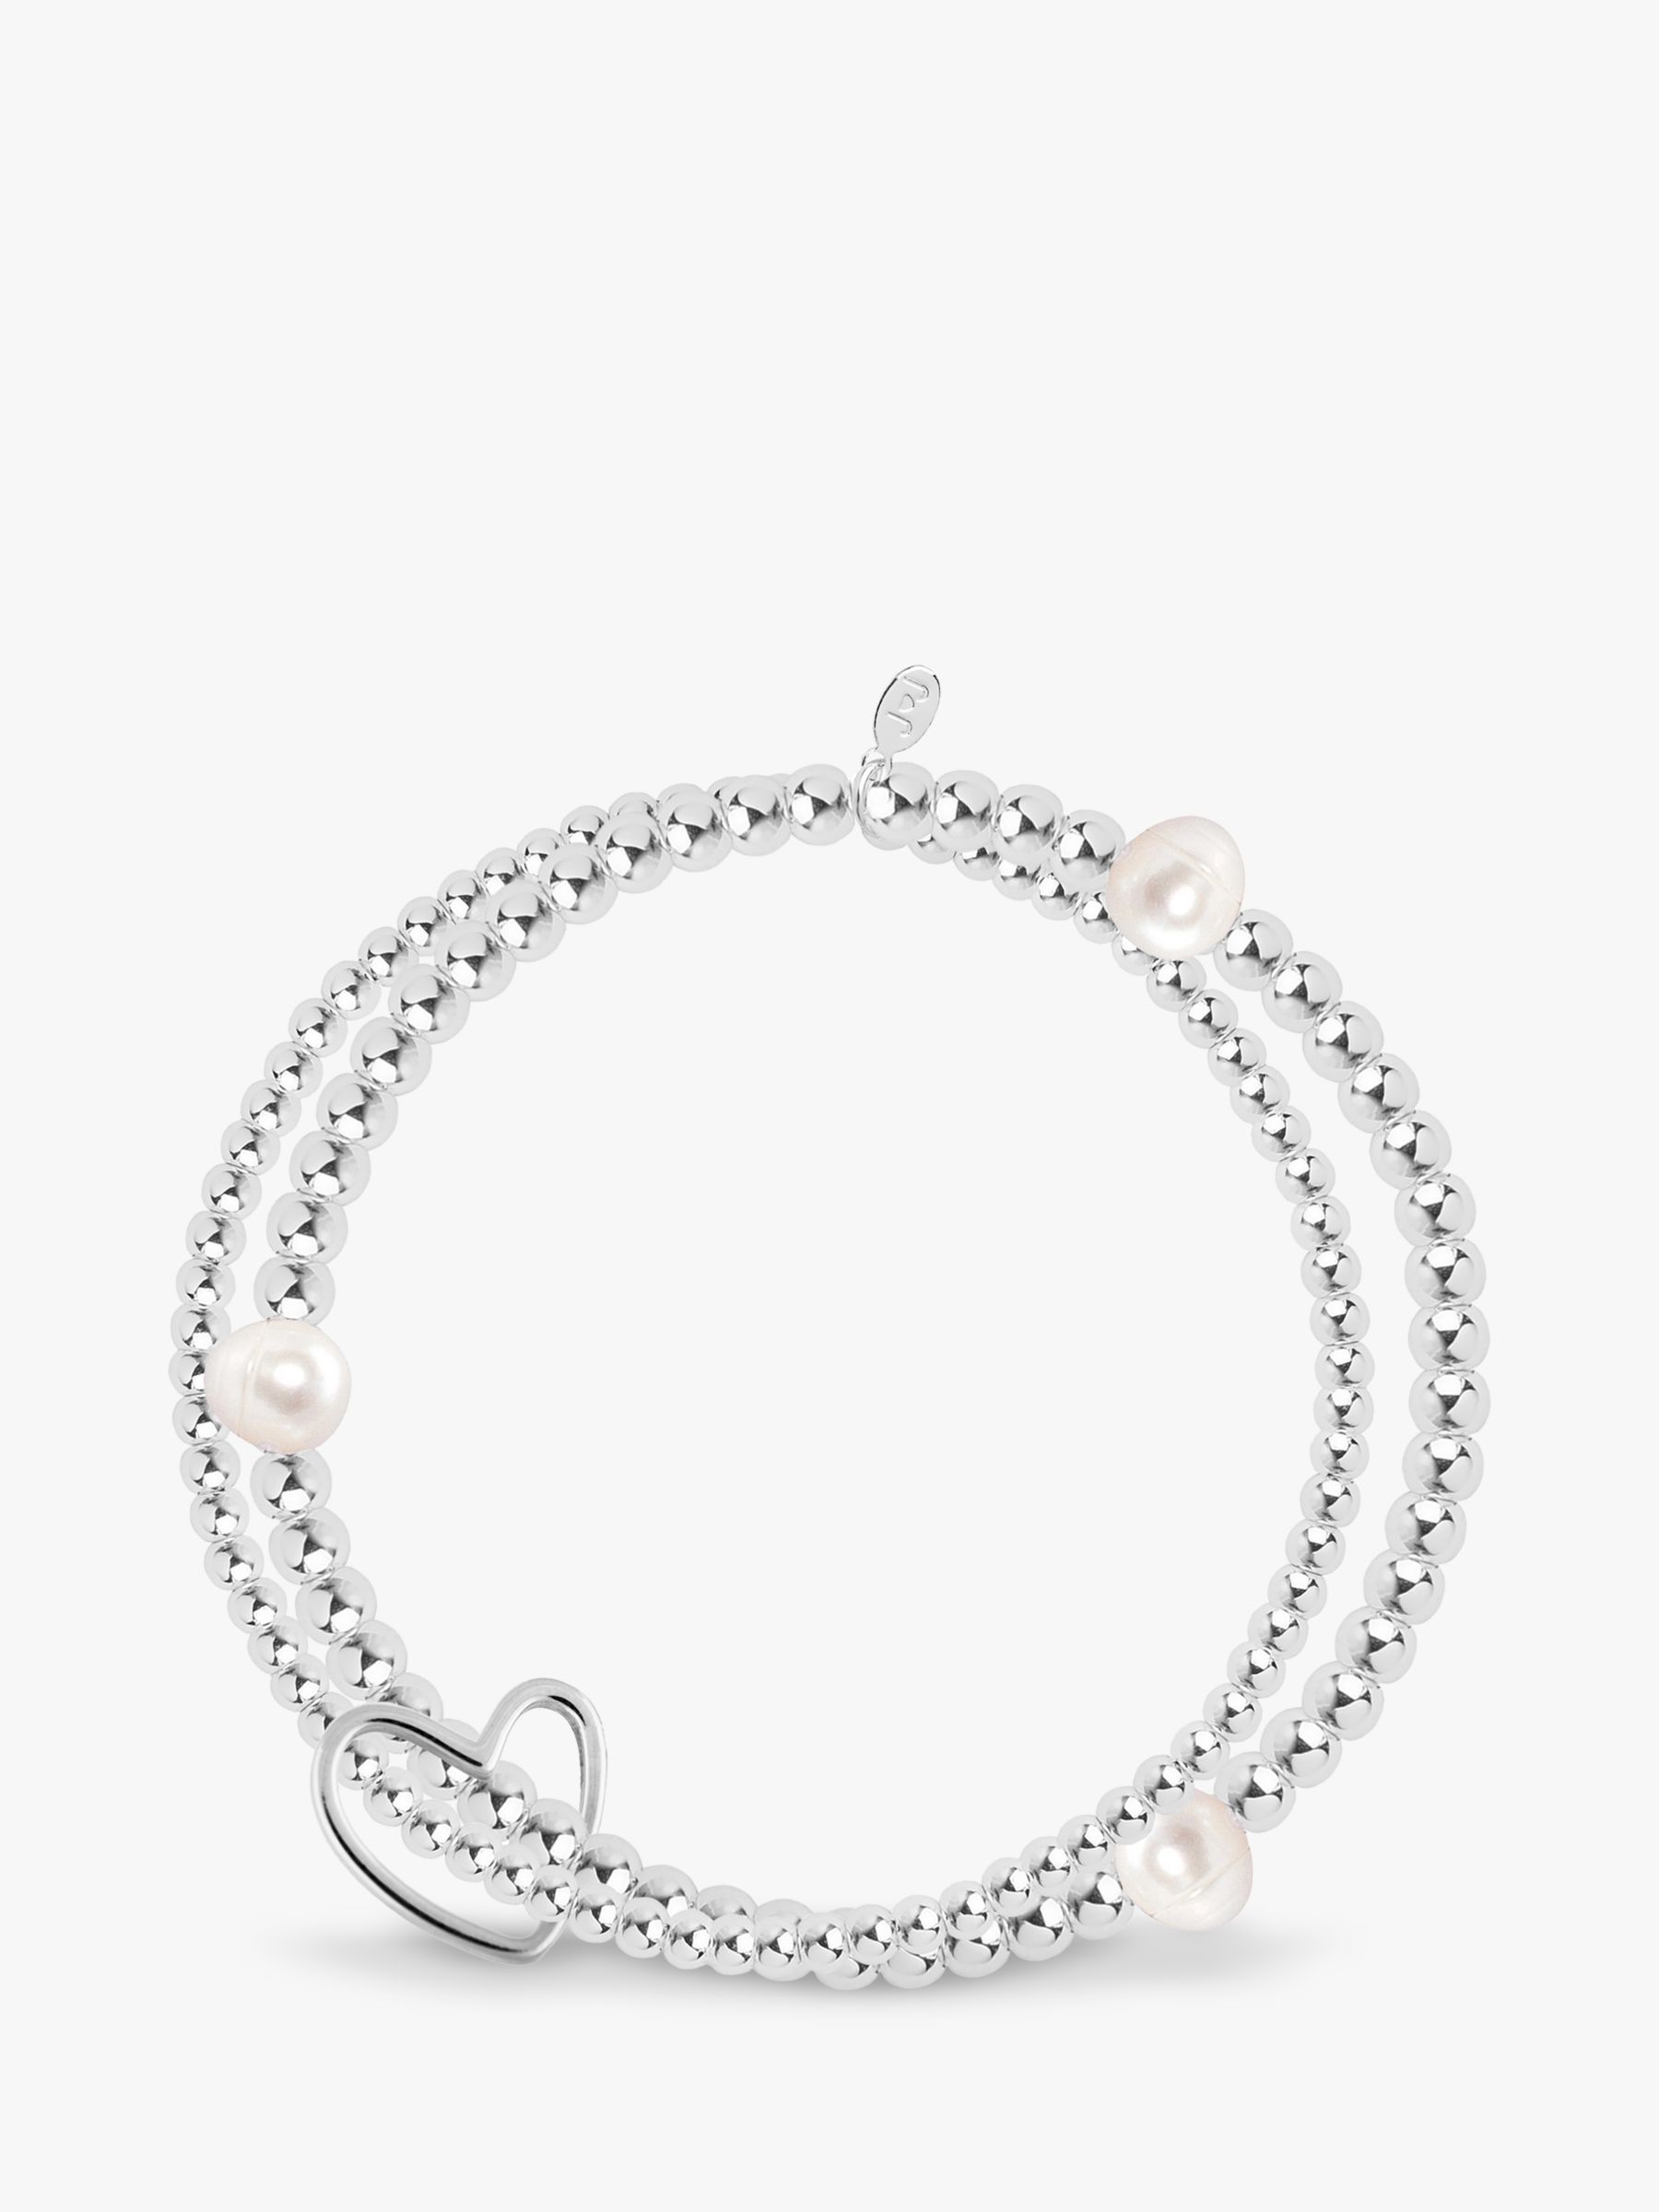 bracelets silver jewellery